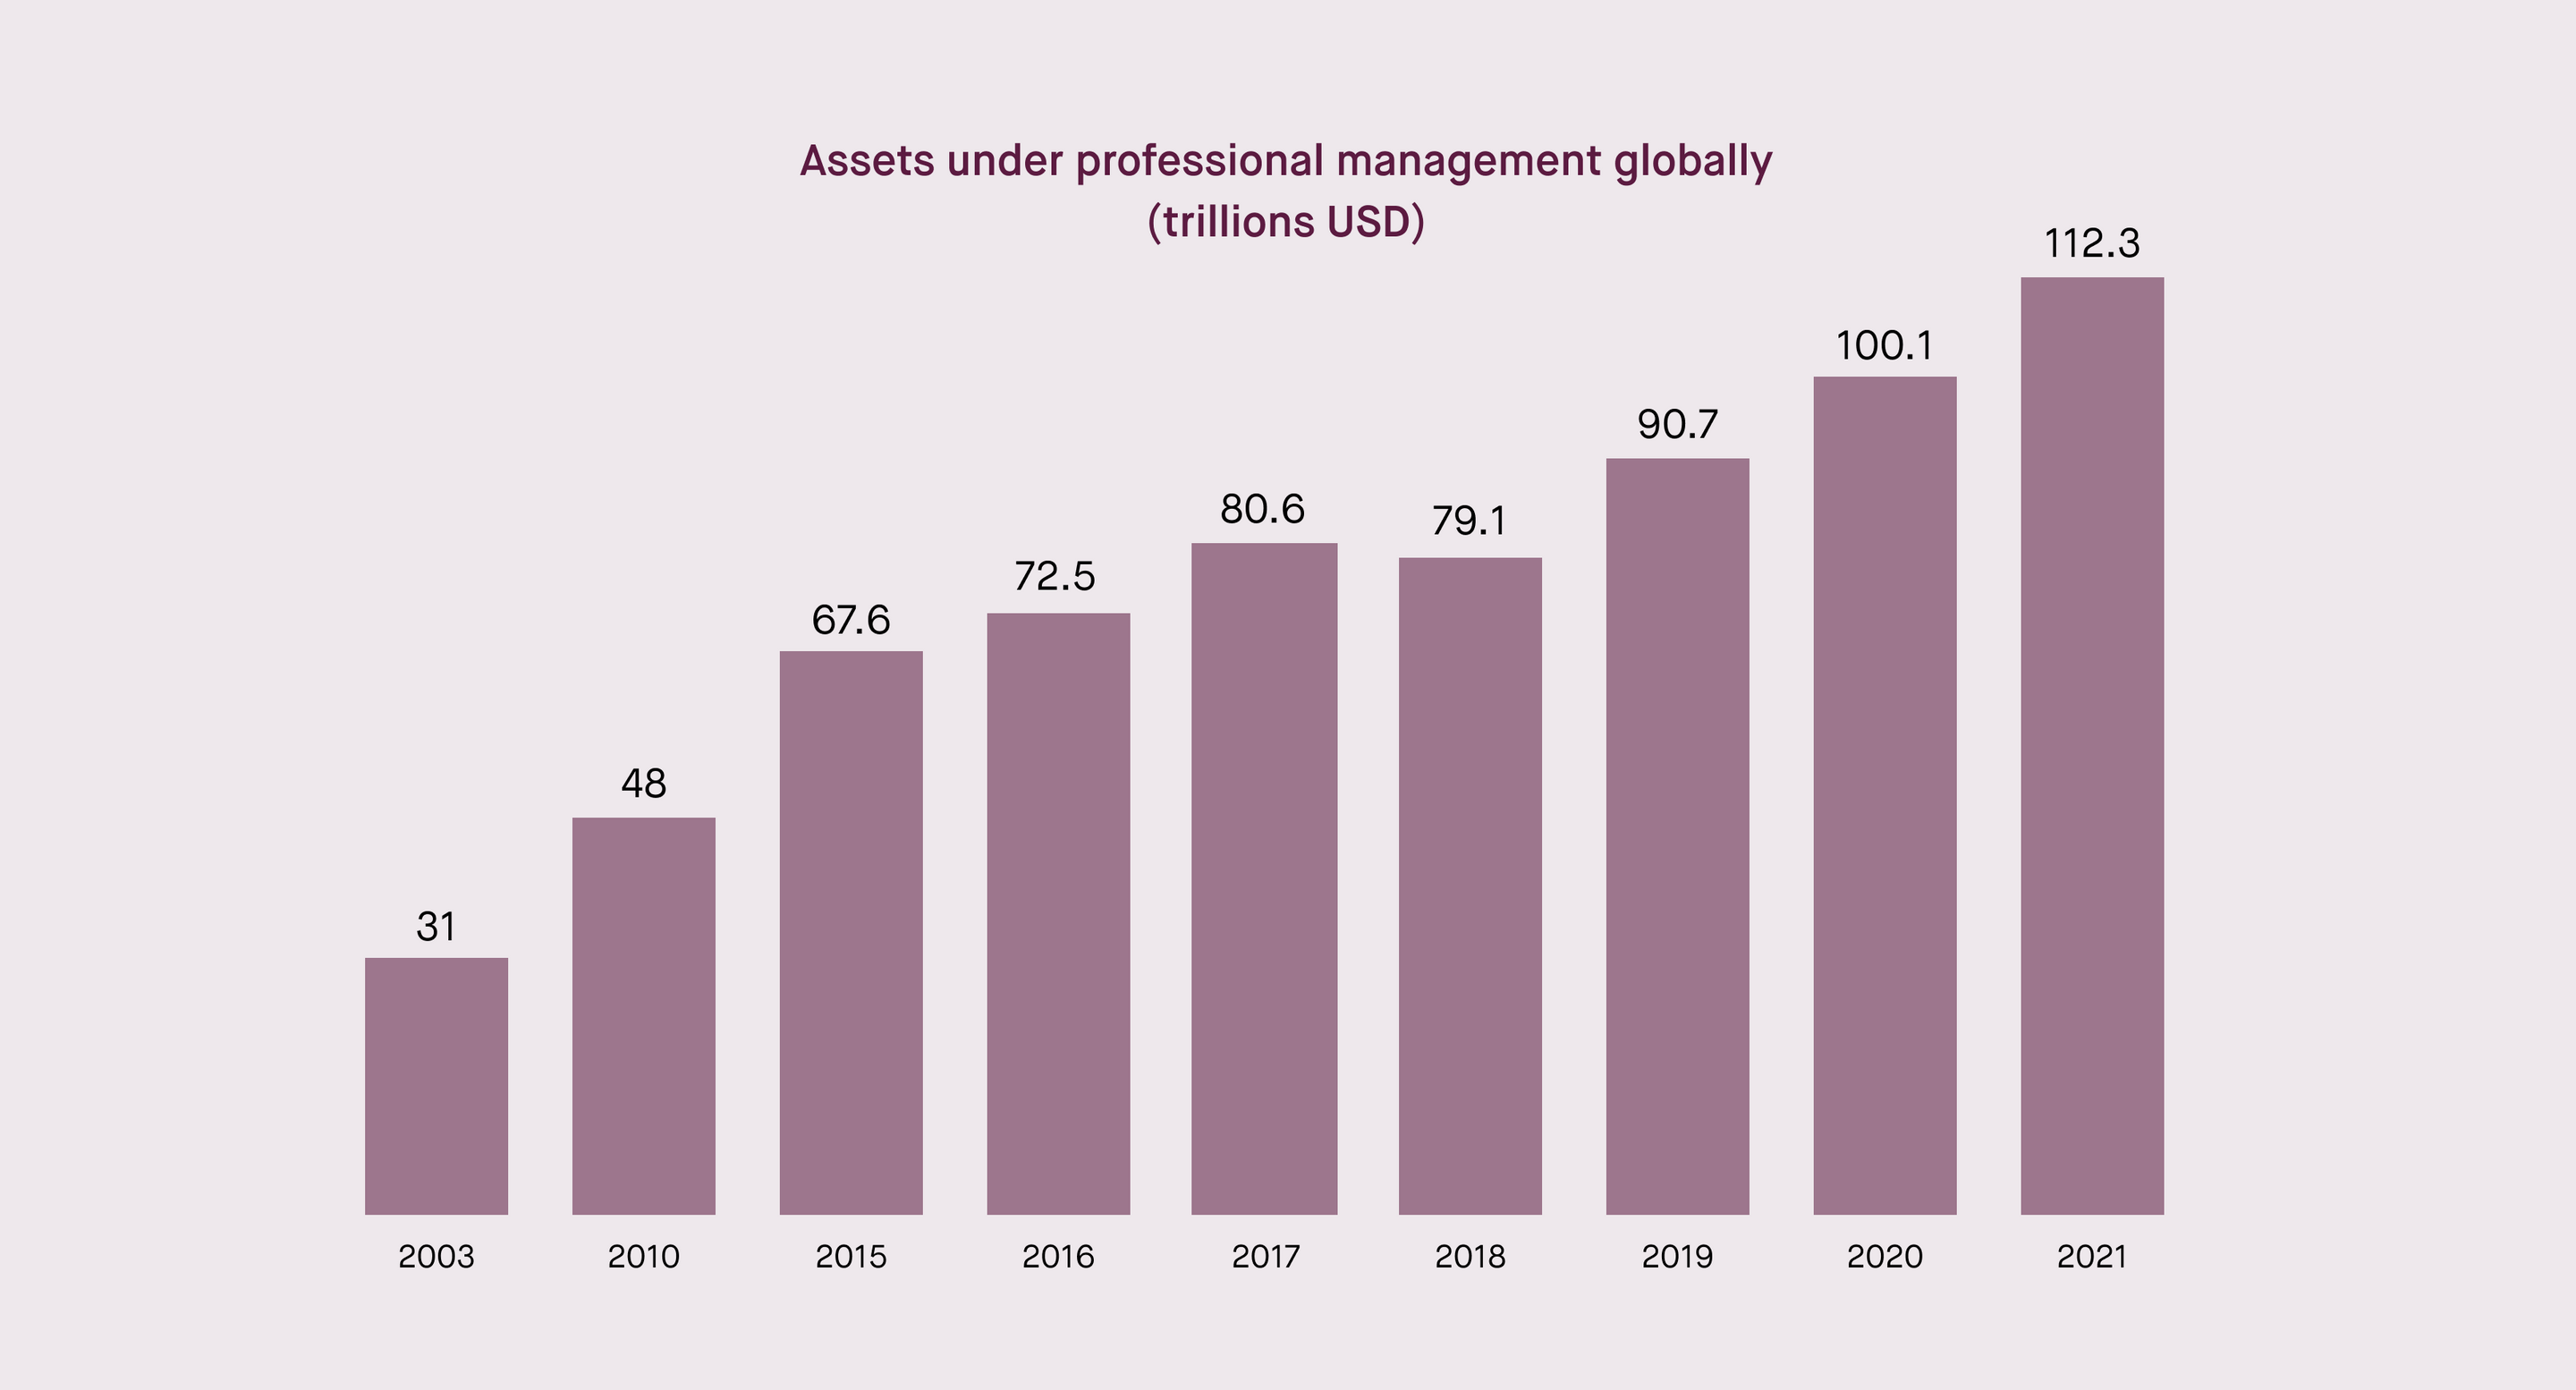 Assets under professional management